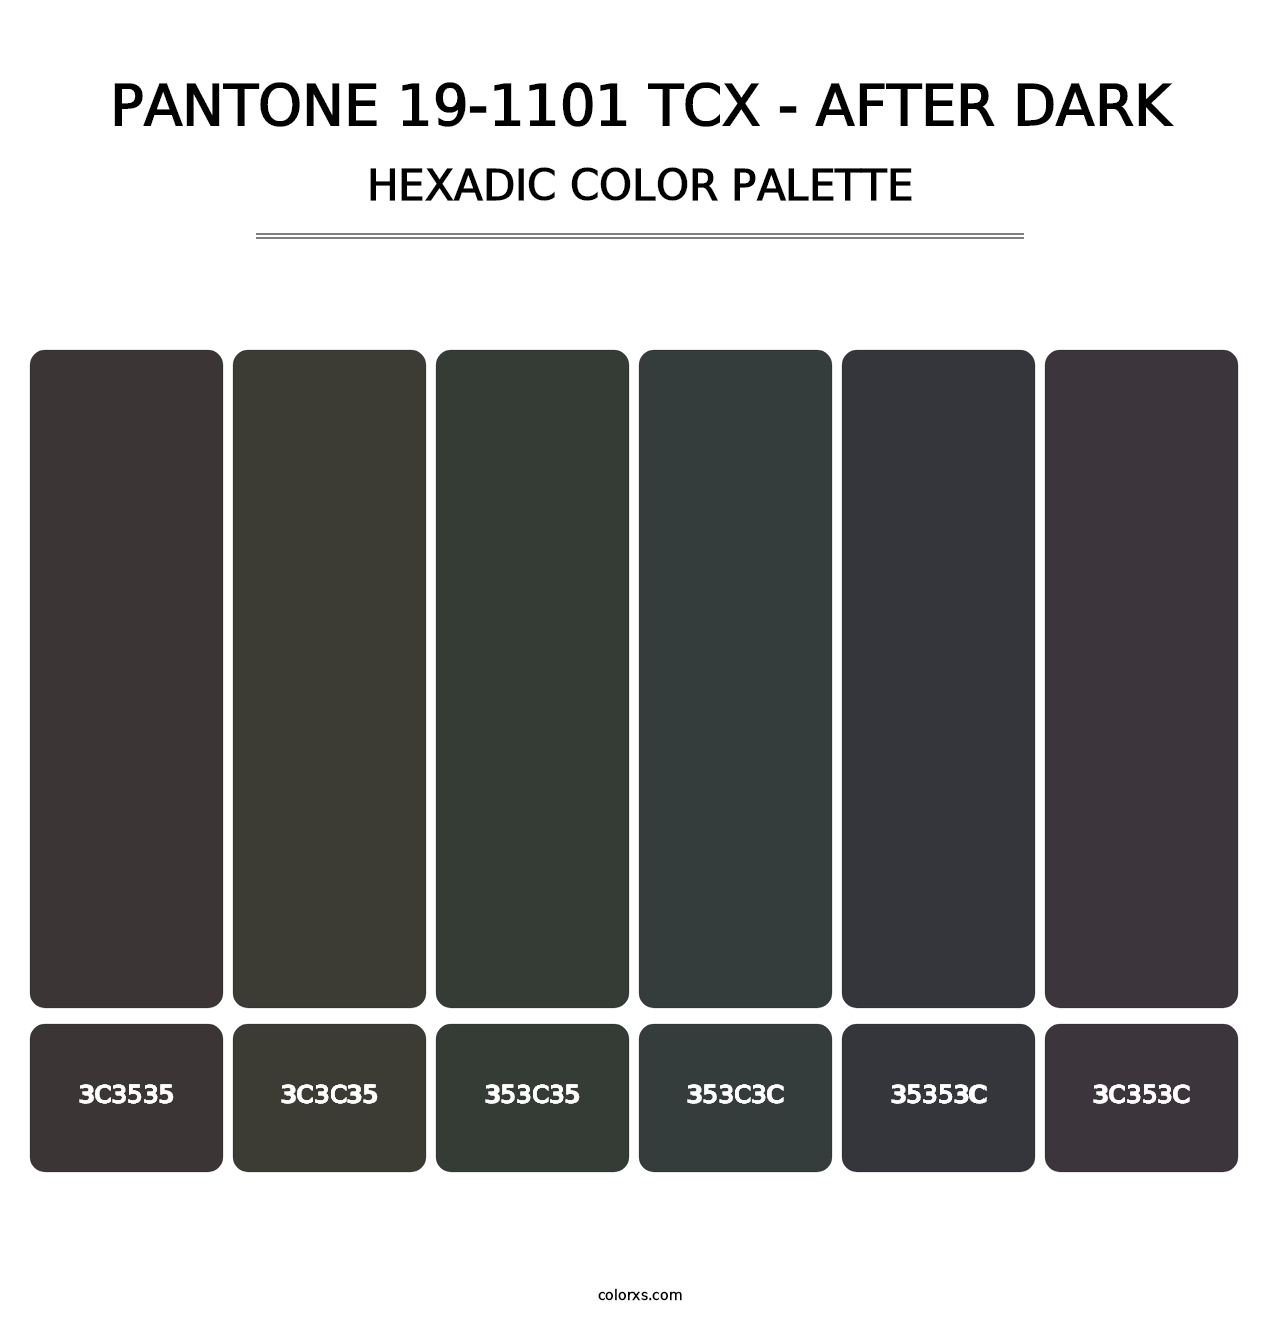 PANTONE 19-1101 TCX - After Dark - Hexadic Color Palette